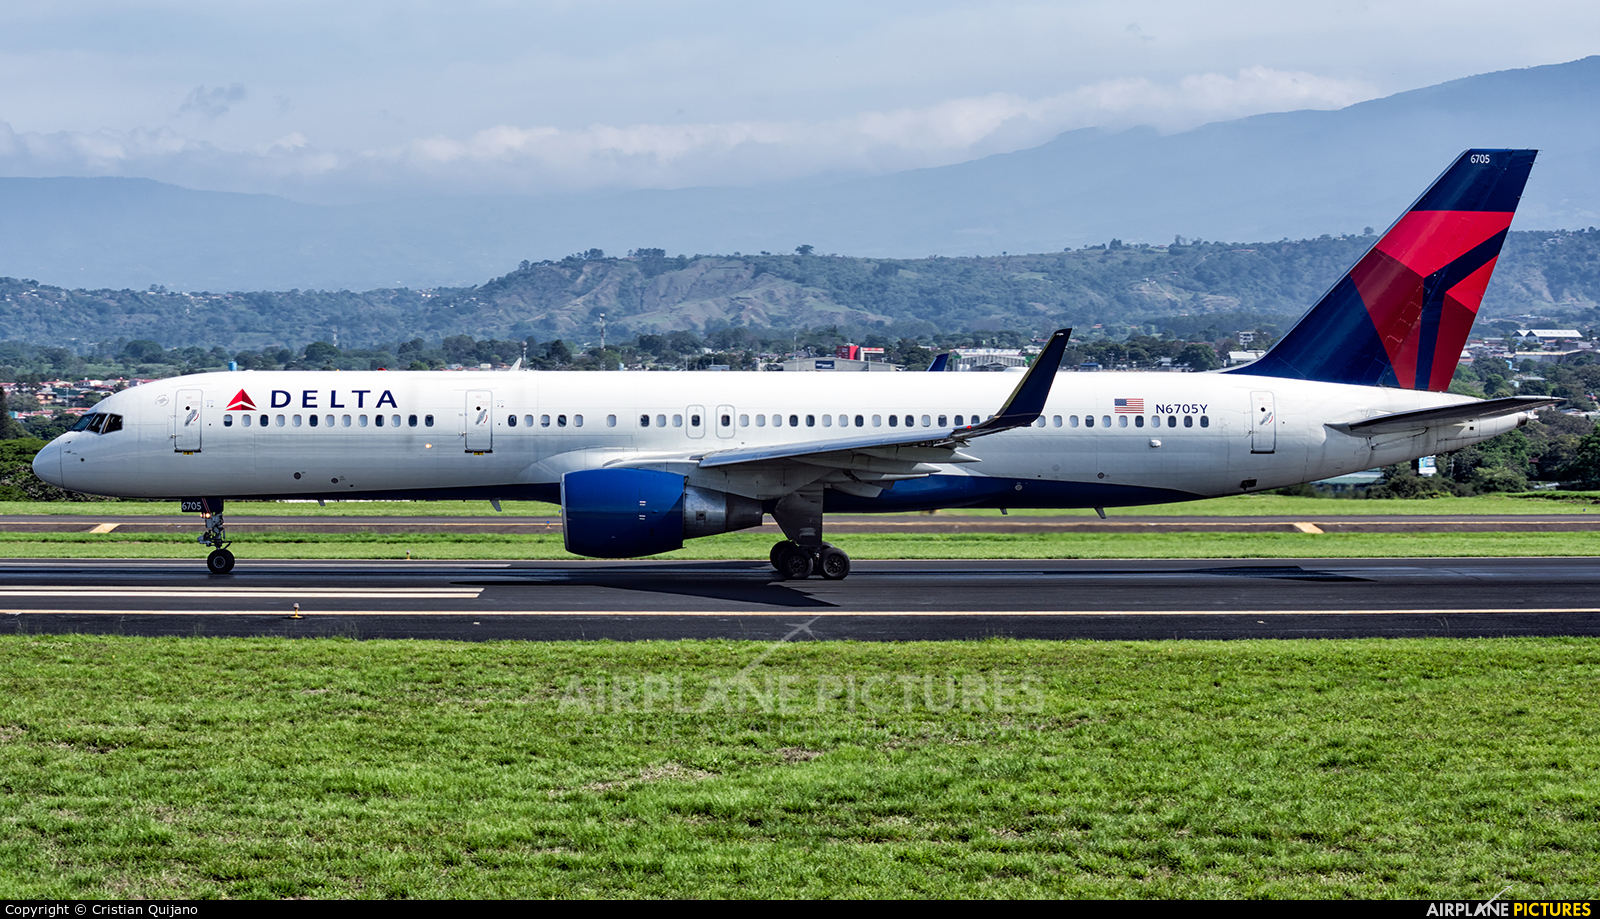 Delta Air Lines N6705Y aircraft at San Jose - Juan Santamaría Intl